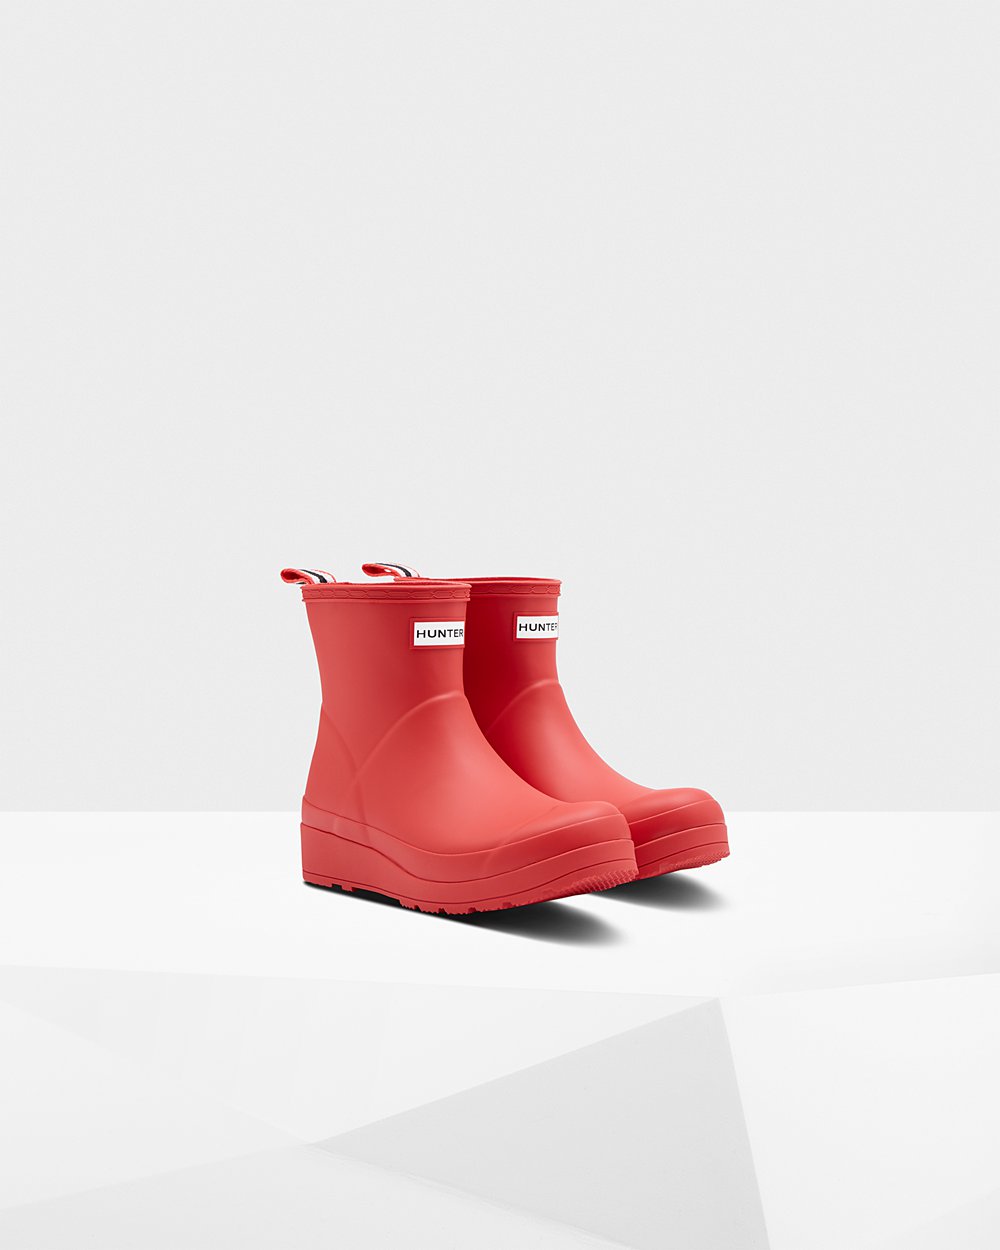 Womens Play Boots - Hunter Original Short Rain (61UITFLWX) - Red